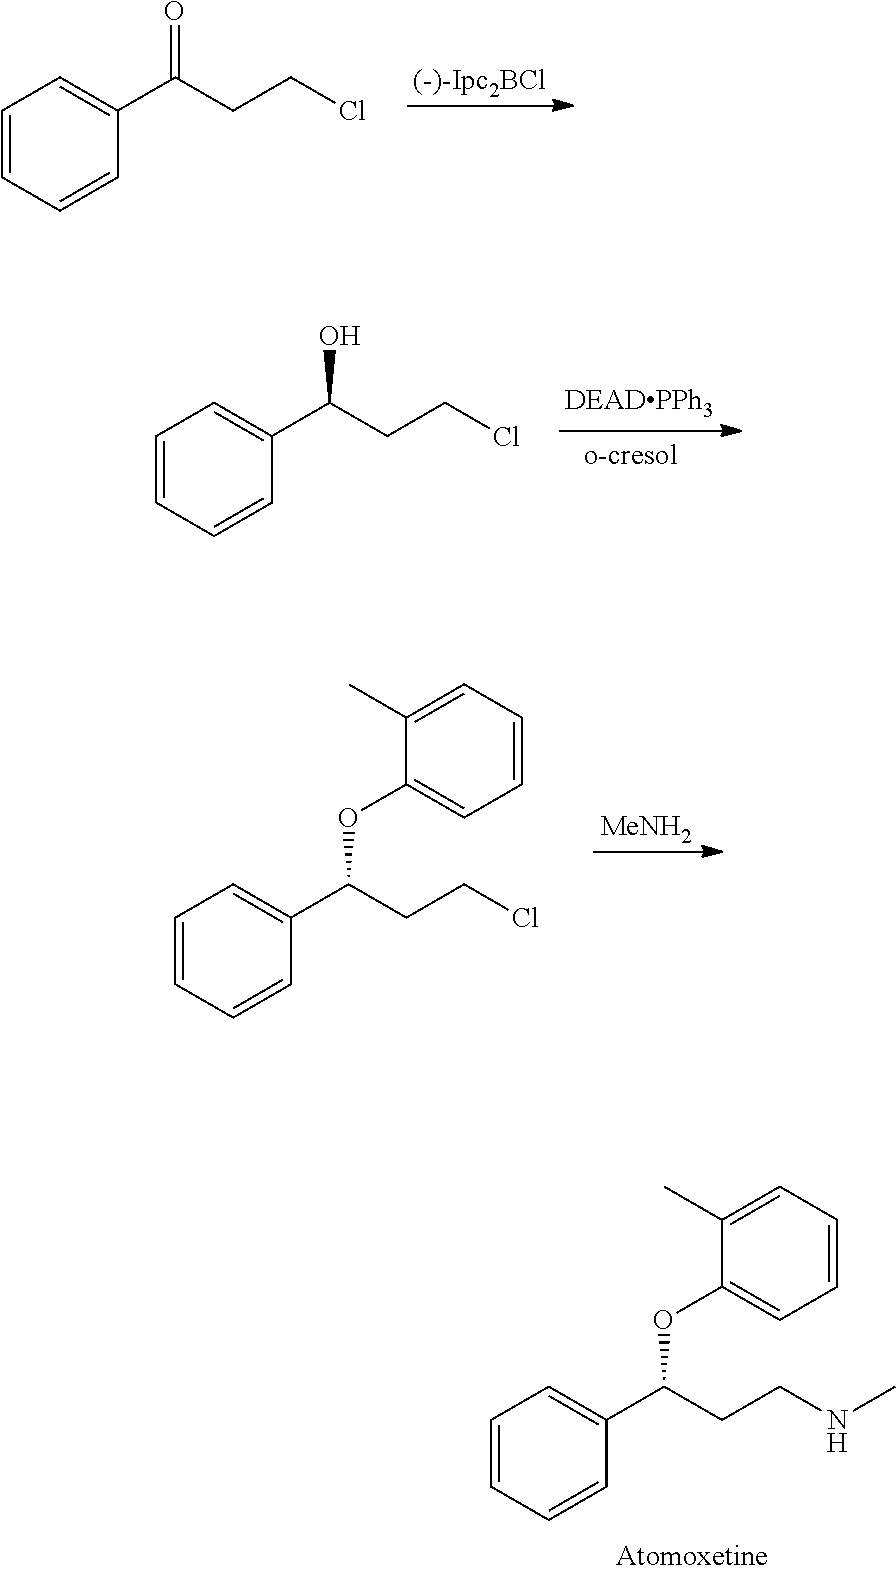 Method for preparing atomoxetine